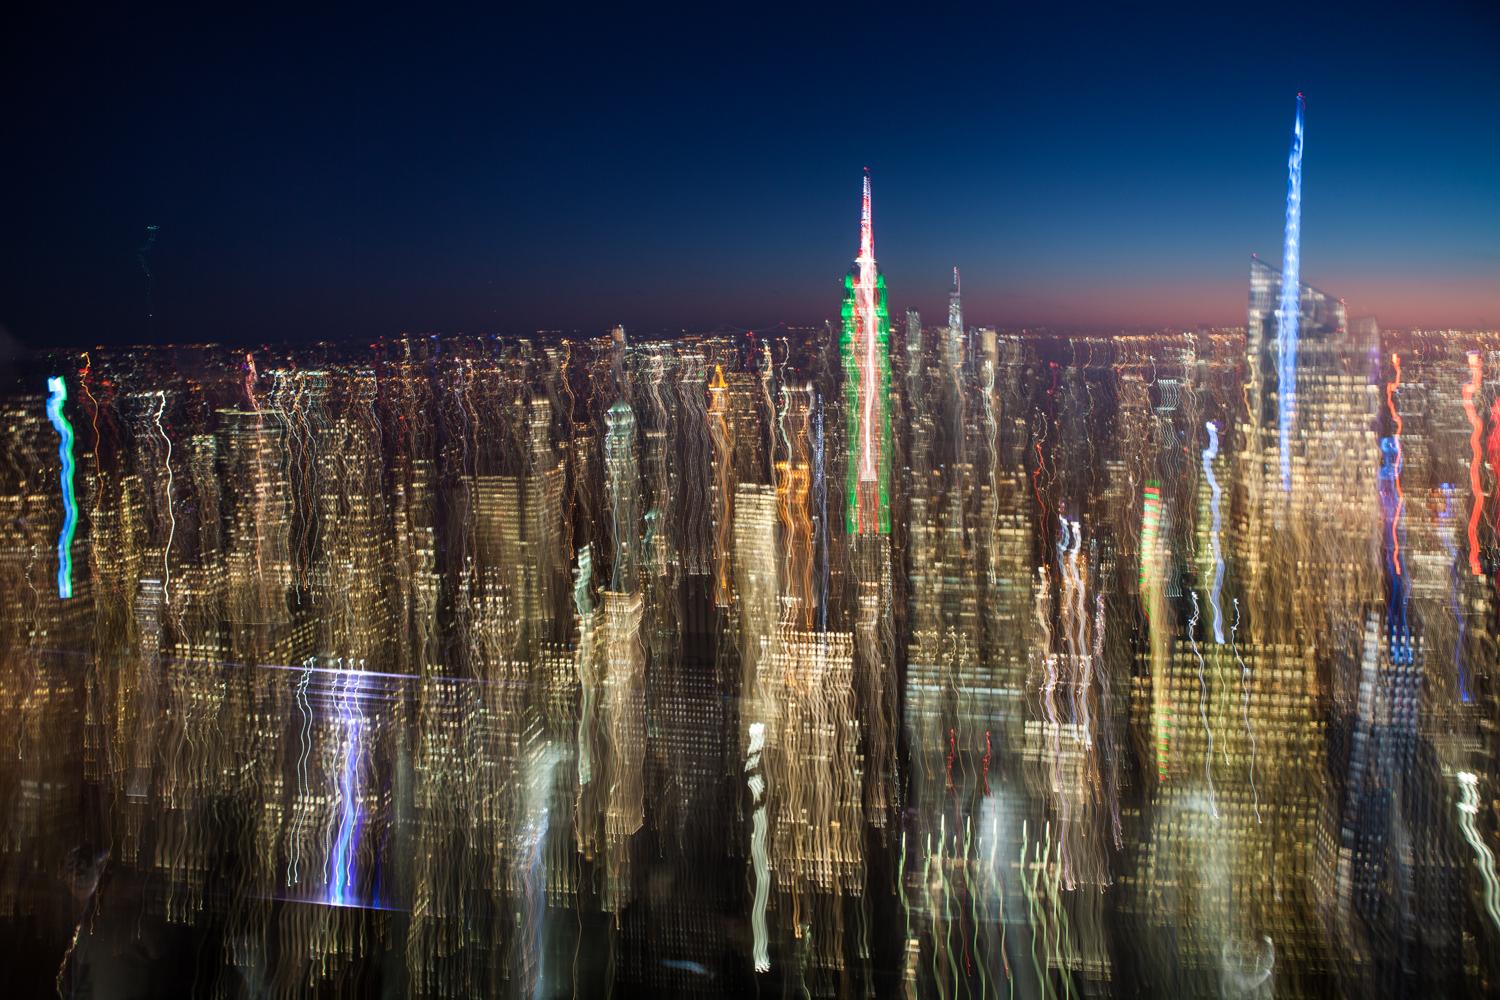 New York Dream 21 by Xavier Dumoulin - Contemporary night photography